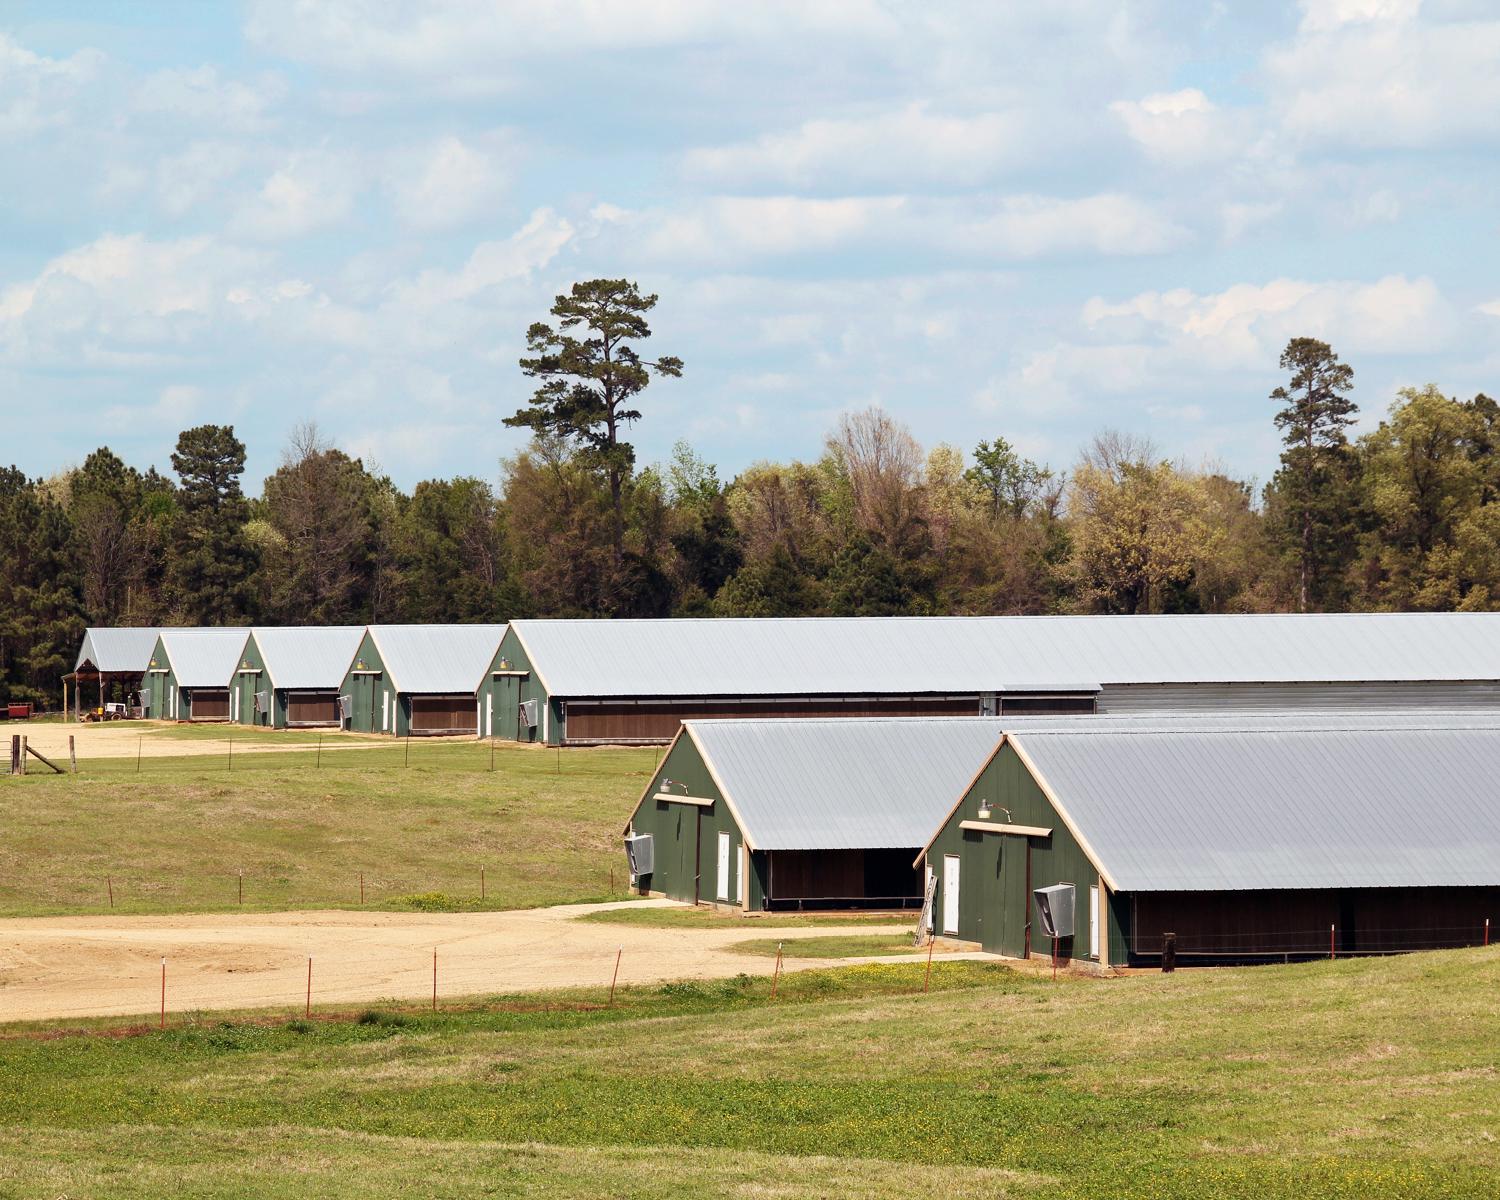 Arkansas loans for poultry houses. Arkansas poultry financing. Financing for poultry equipment and improvements.